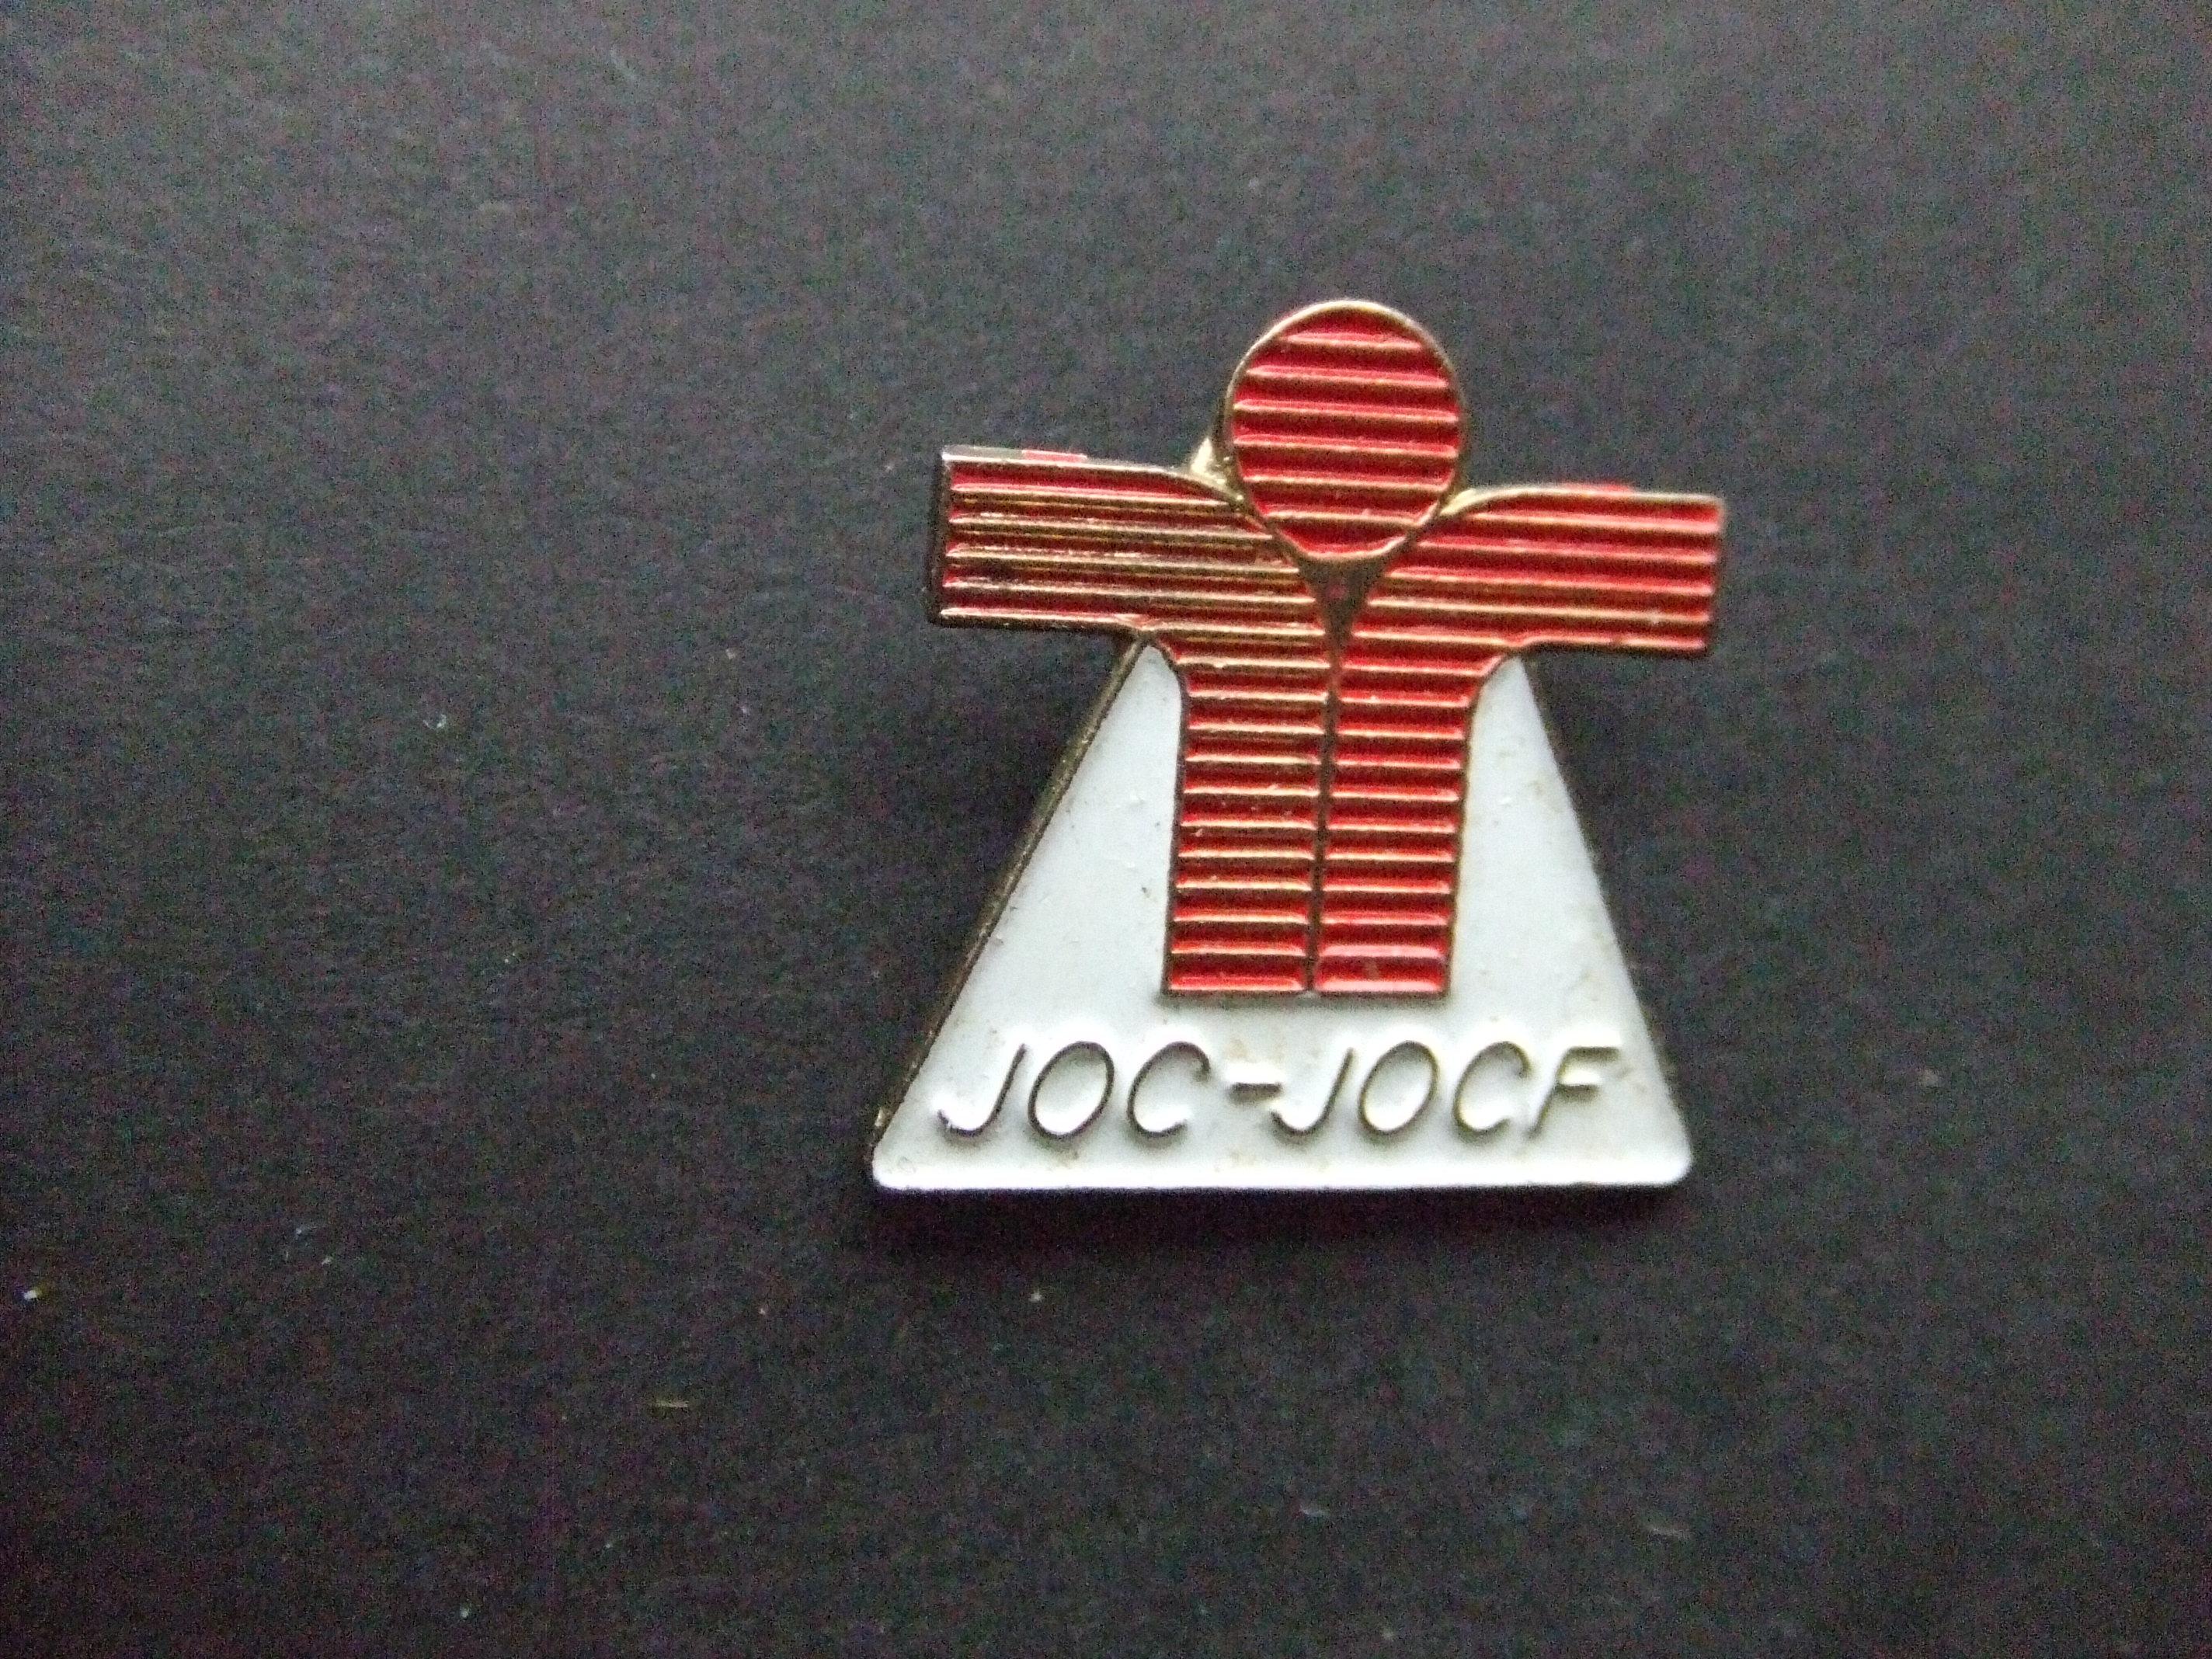 Joc-Jocf Katholieke jongerenvereniging Frankrijk